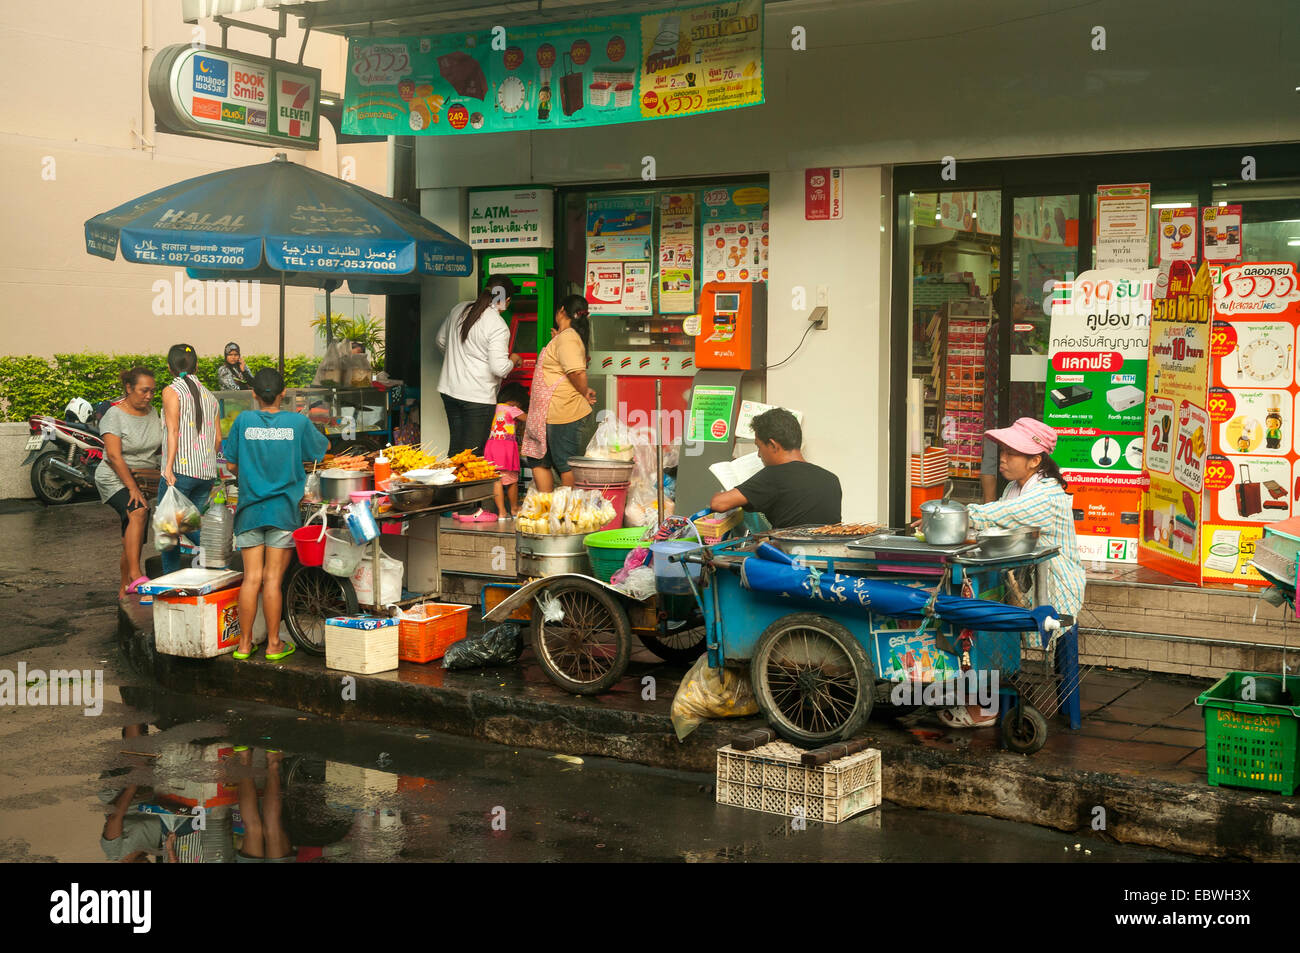 Colporteurs de l'alimentation de rue à Bangkok, Thaïlande Banque D'Images